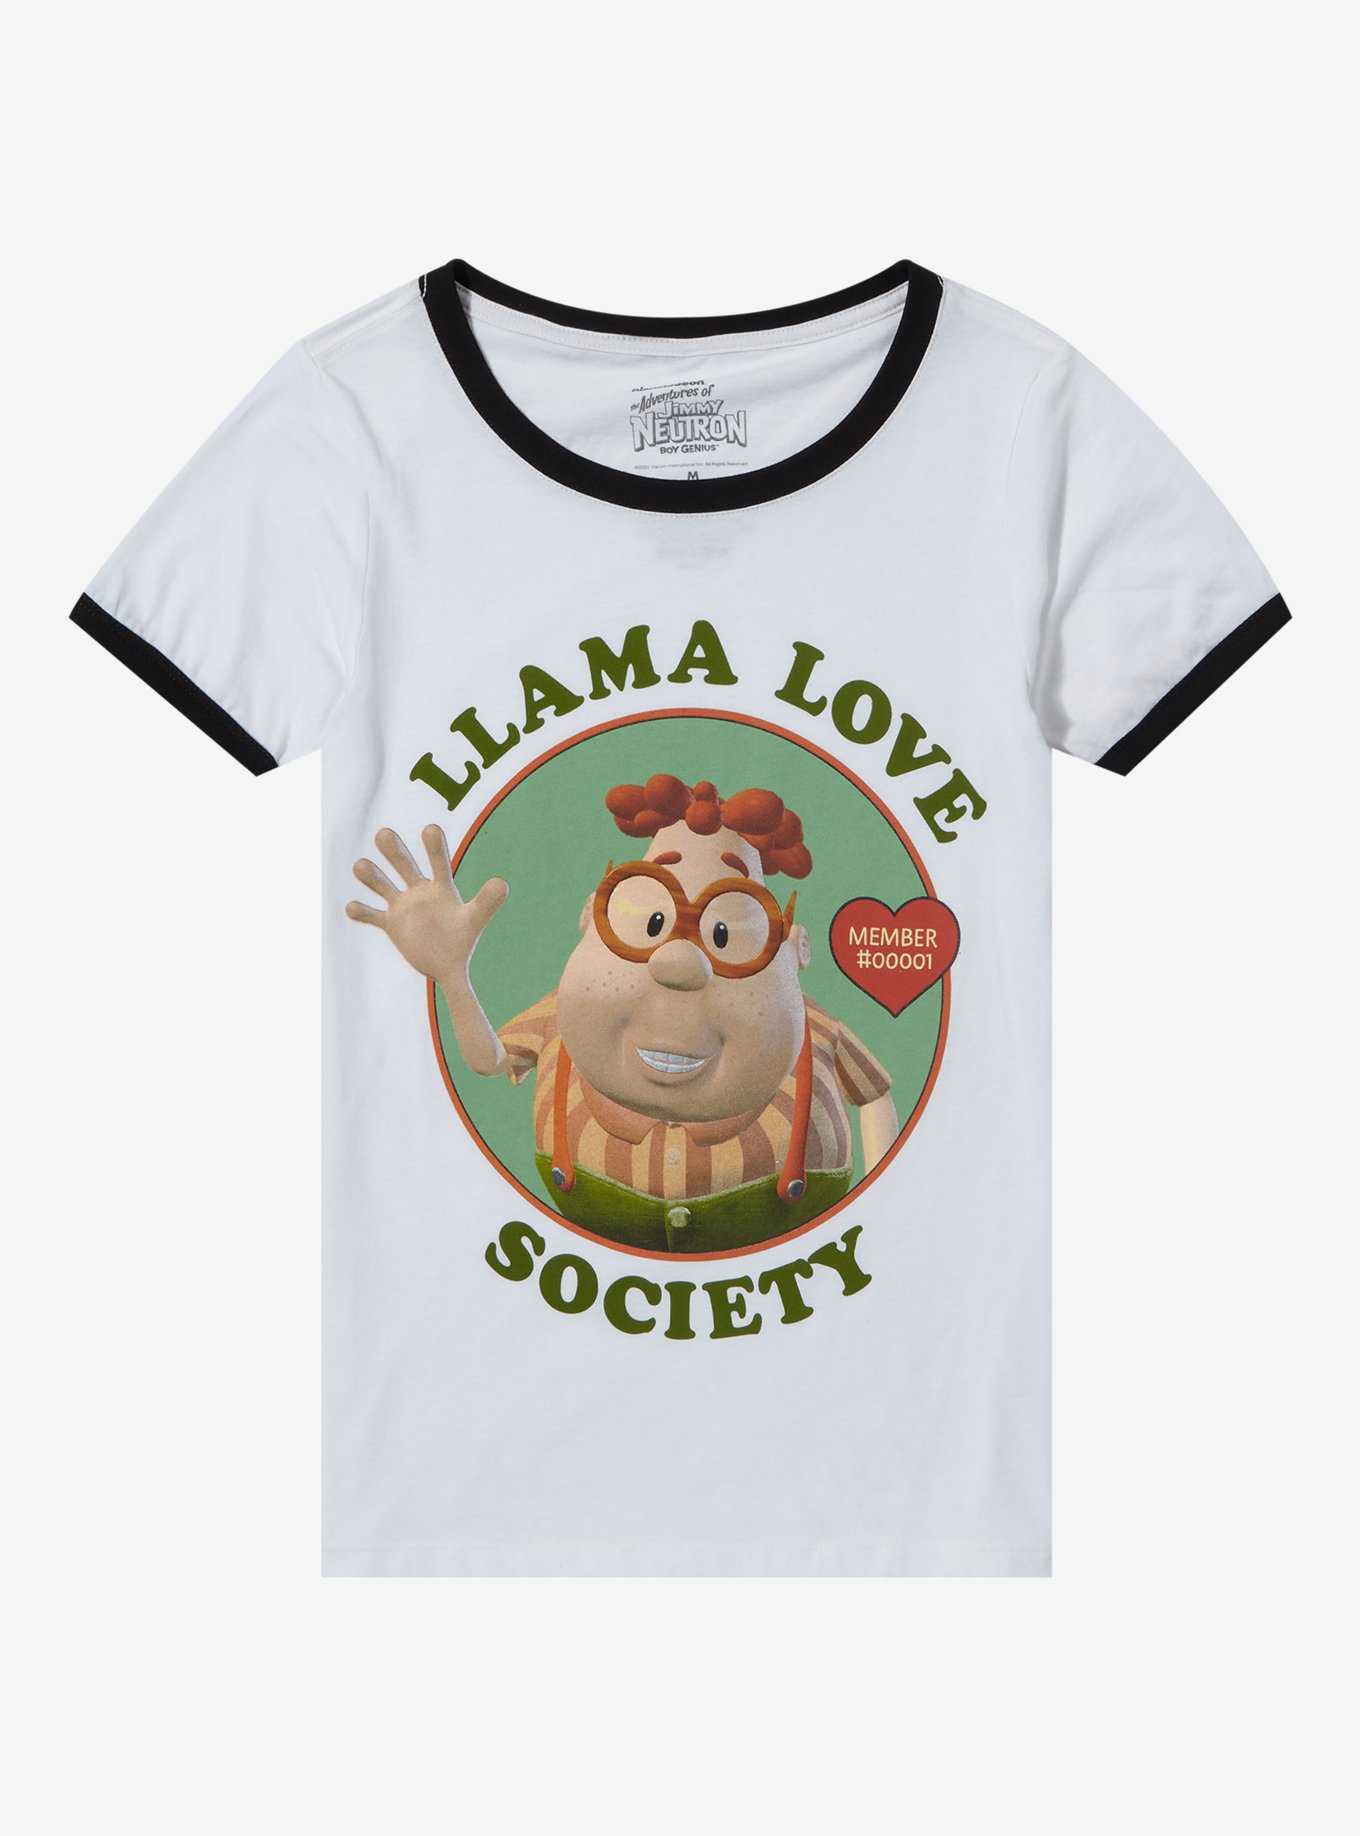 Jimmy Neutron Carl Llama Society Girls Ringer T-Shirt, , hi-res